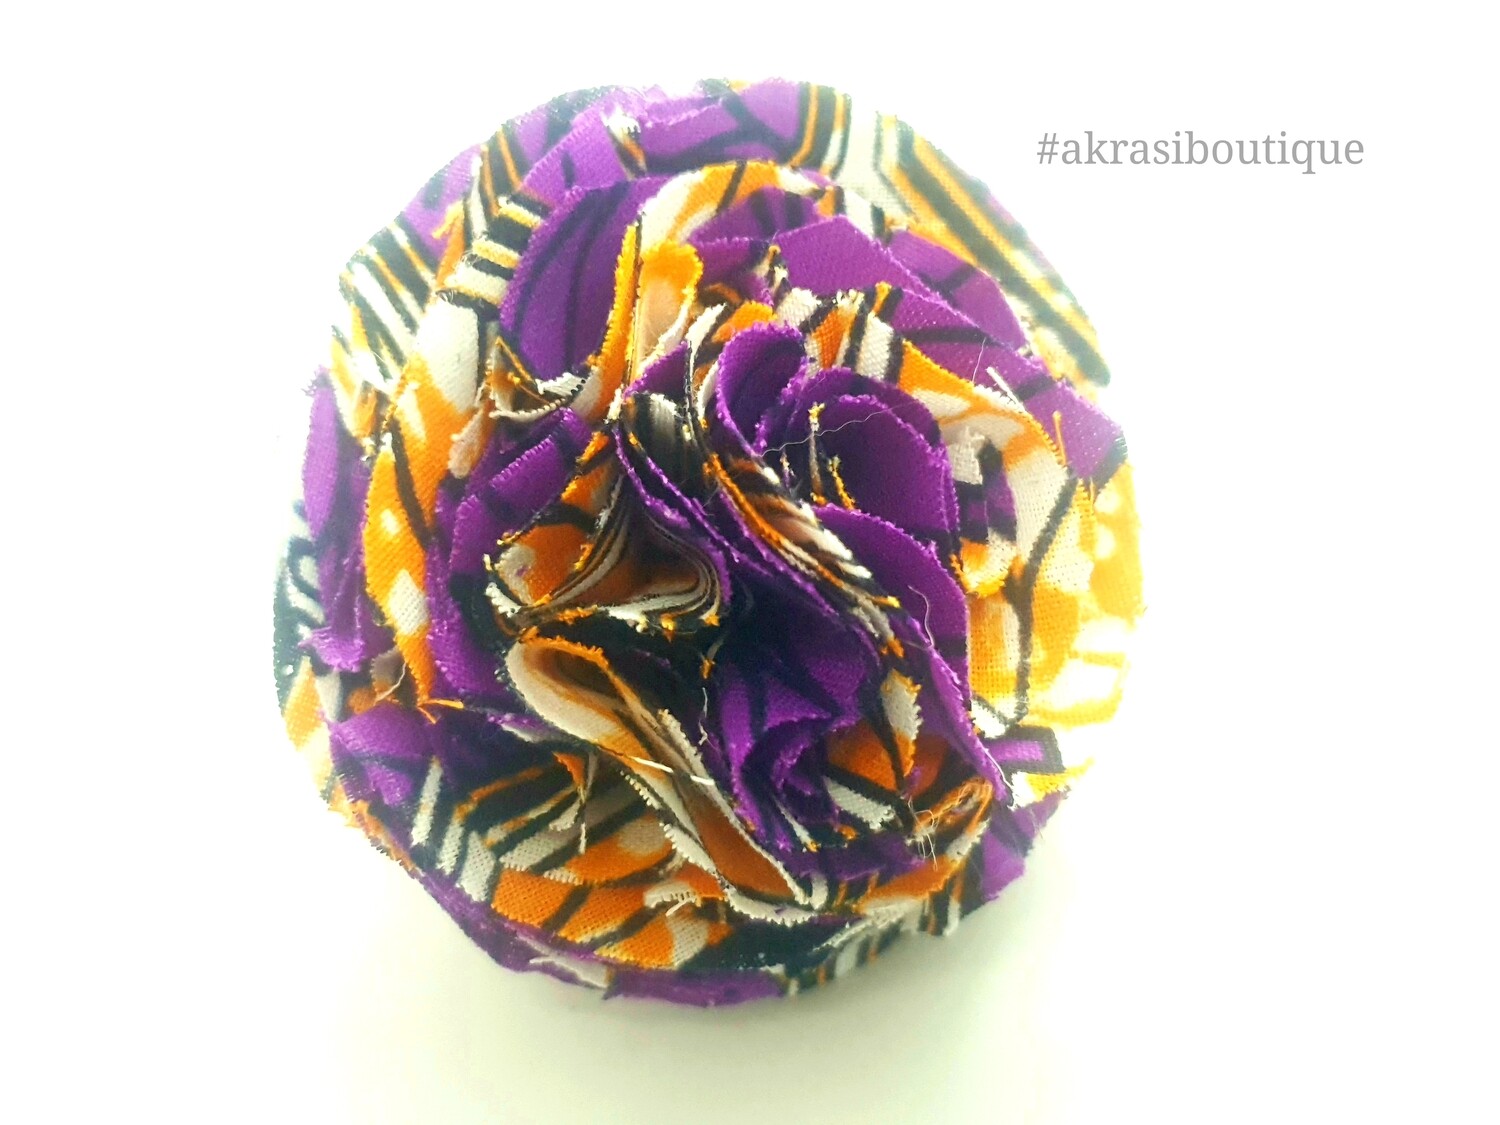 African print purple and orange ruffle flower | flower pin | flower hair clip | flower brooch | clothing accessories